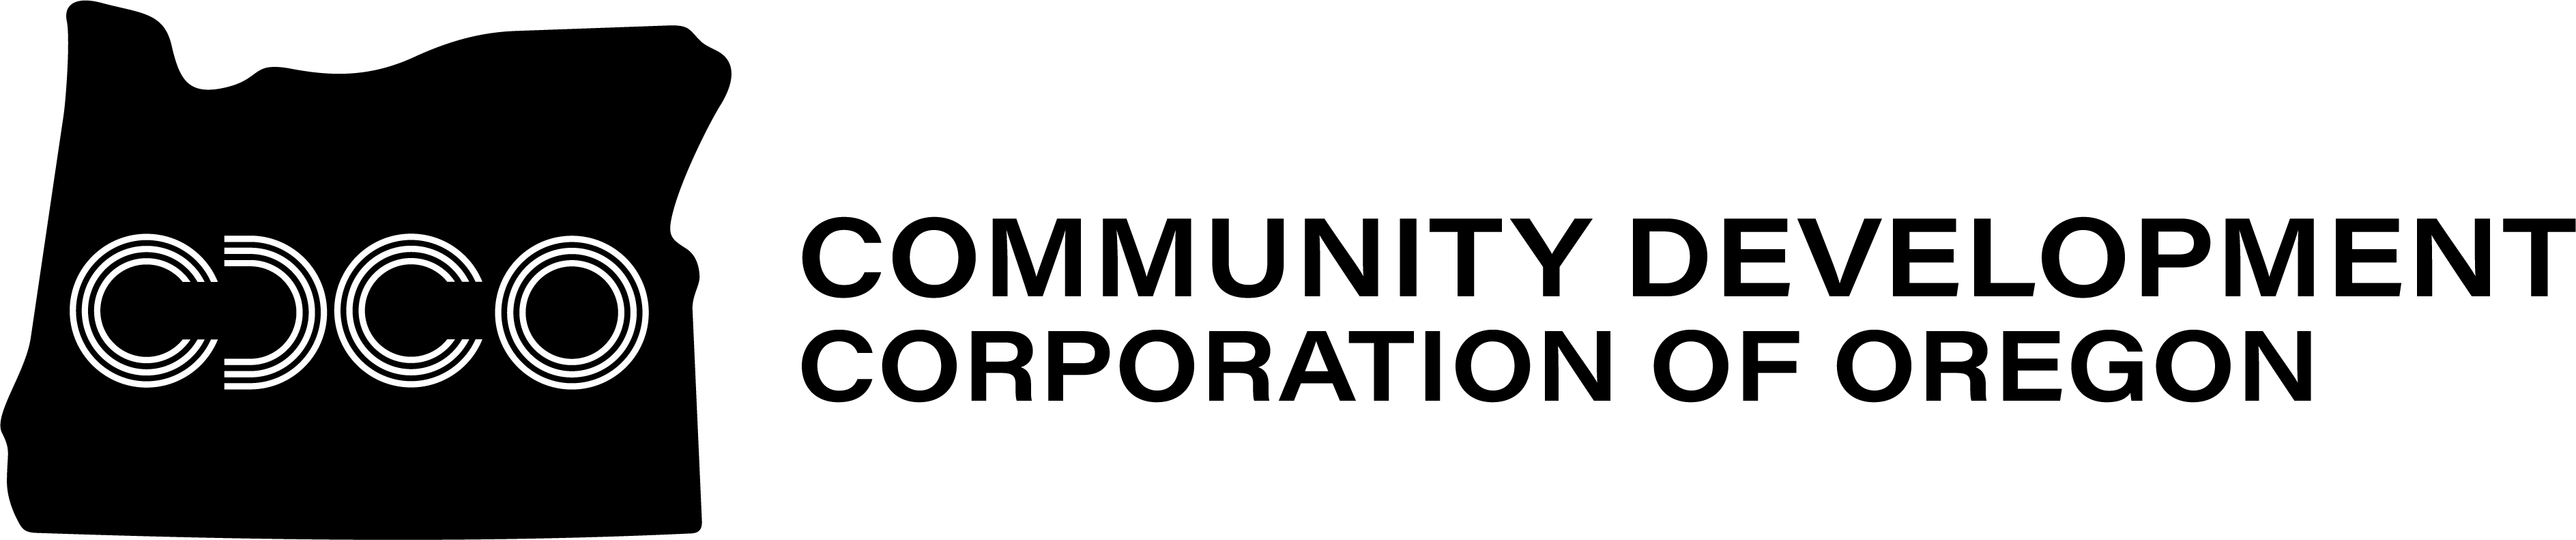 CDCO Logo_Oregon_black